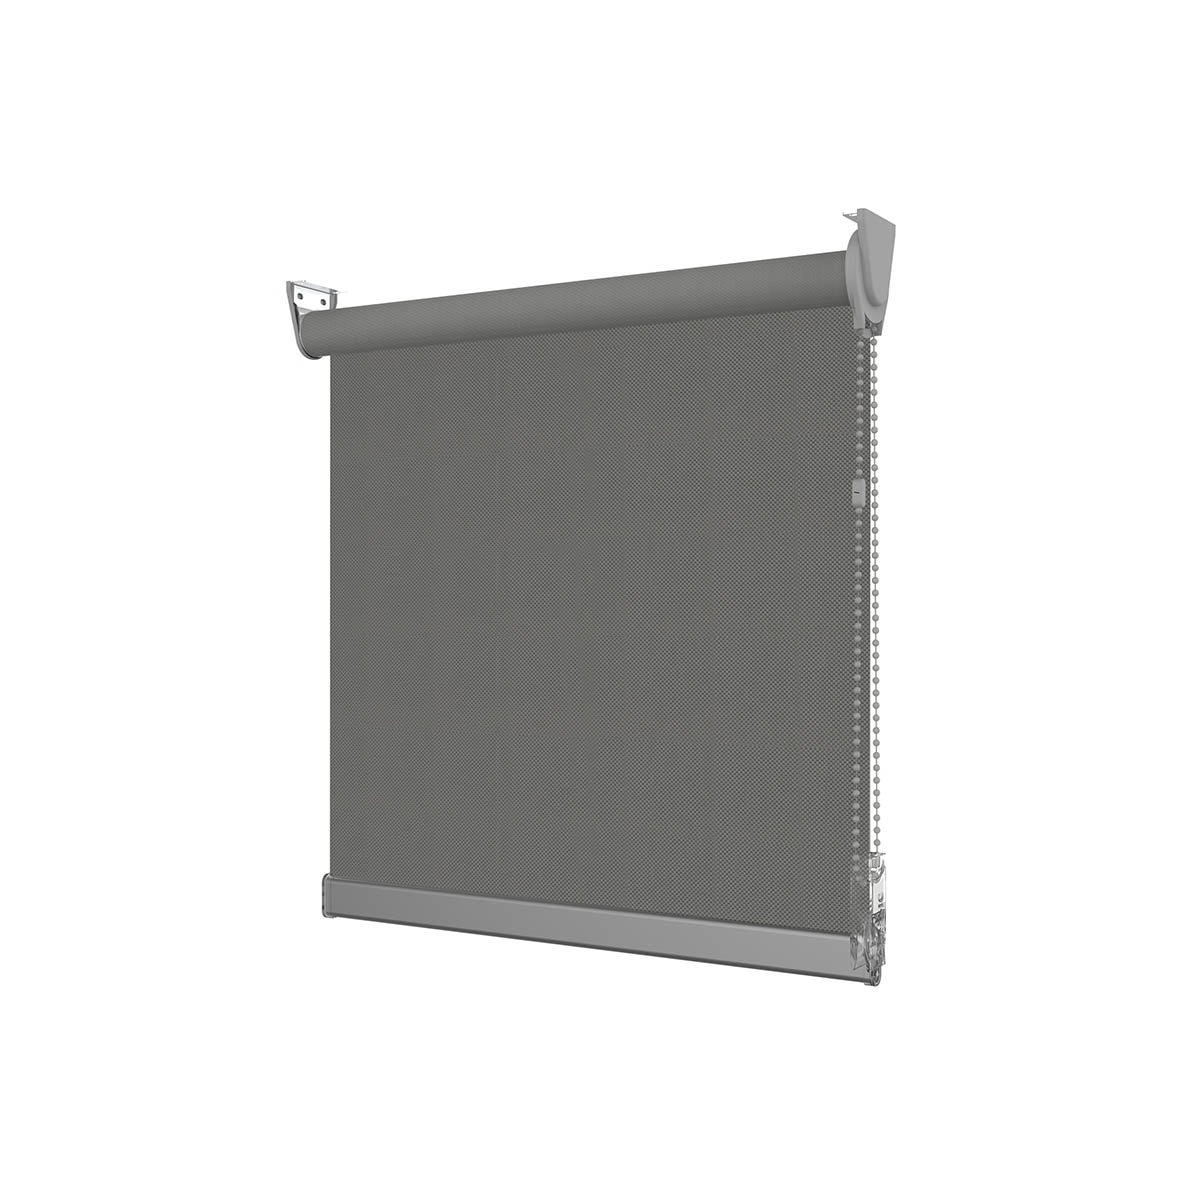 Persiana Enrollable Translucida Screen Phifer 4500 New 1.20 X 2.50 Granite Classic